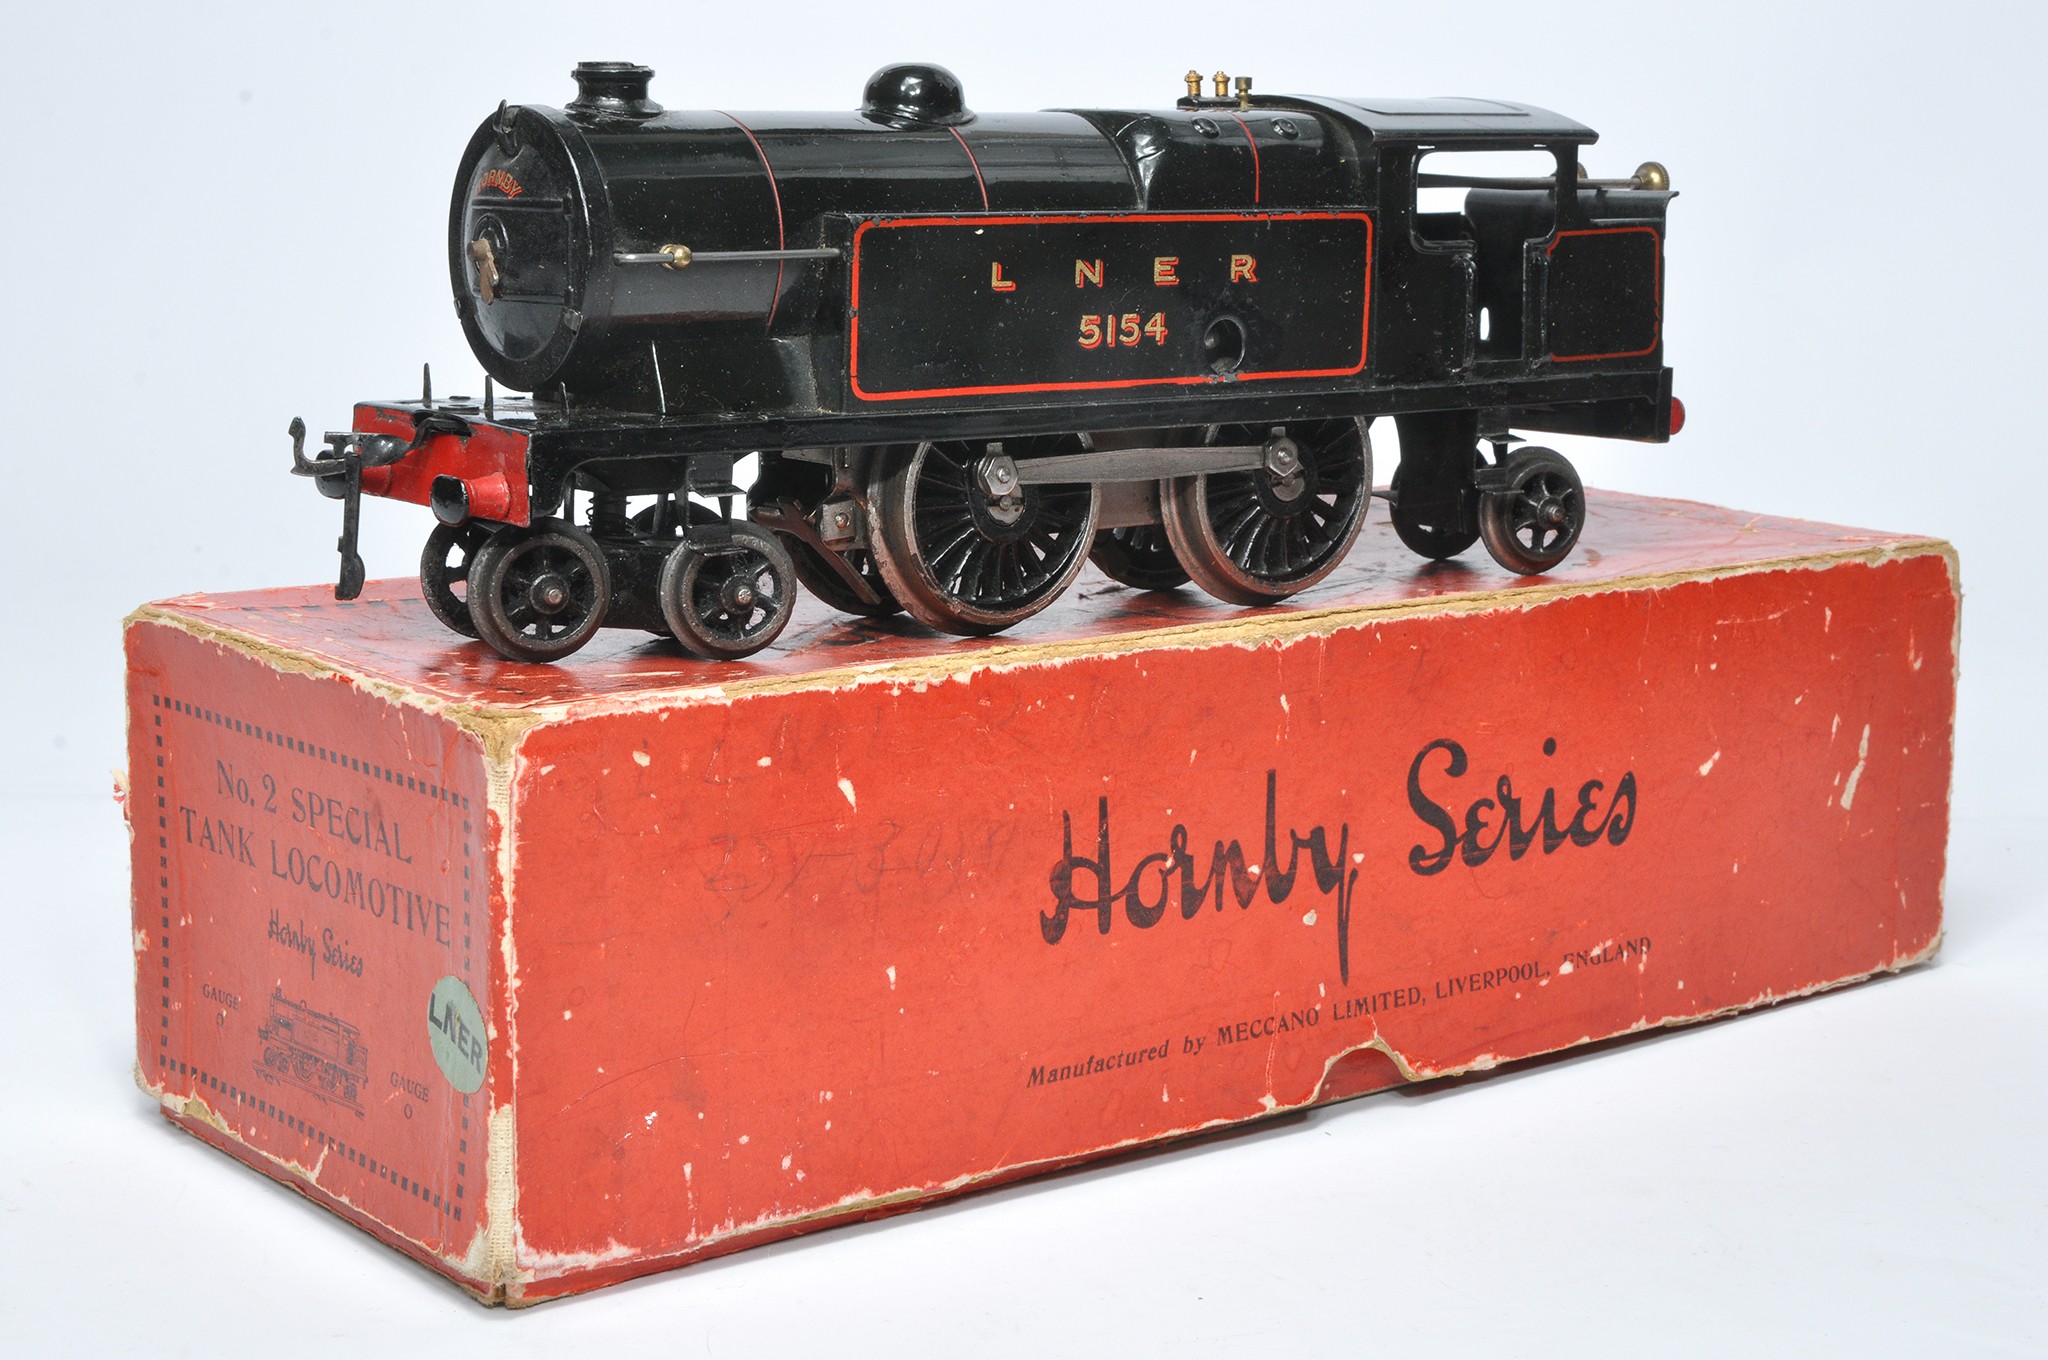 Hornby O Gauge Model Railway comprising No. 2 Special Tank Locomotive, LNER 5154. Displays generally